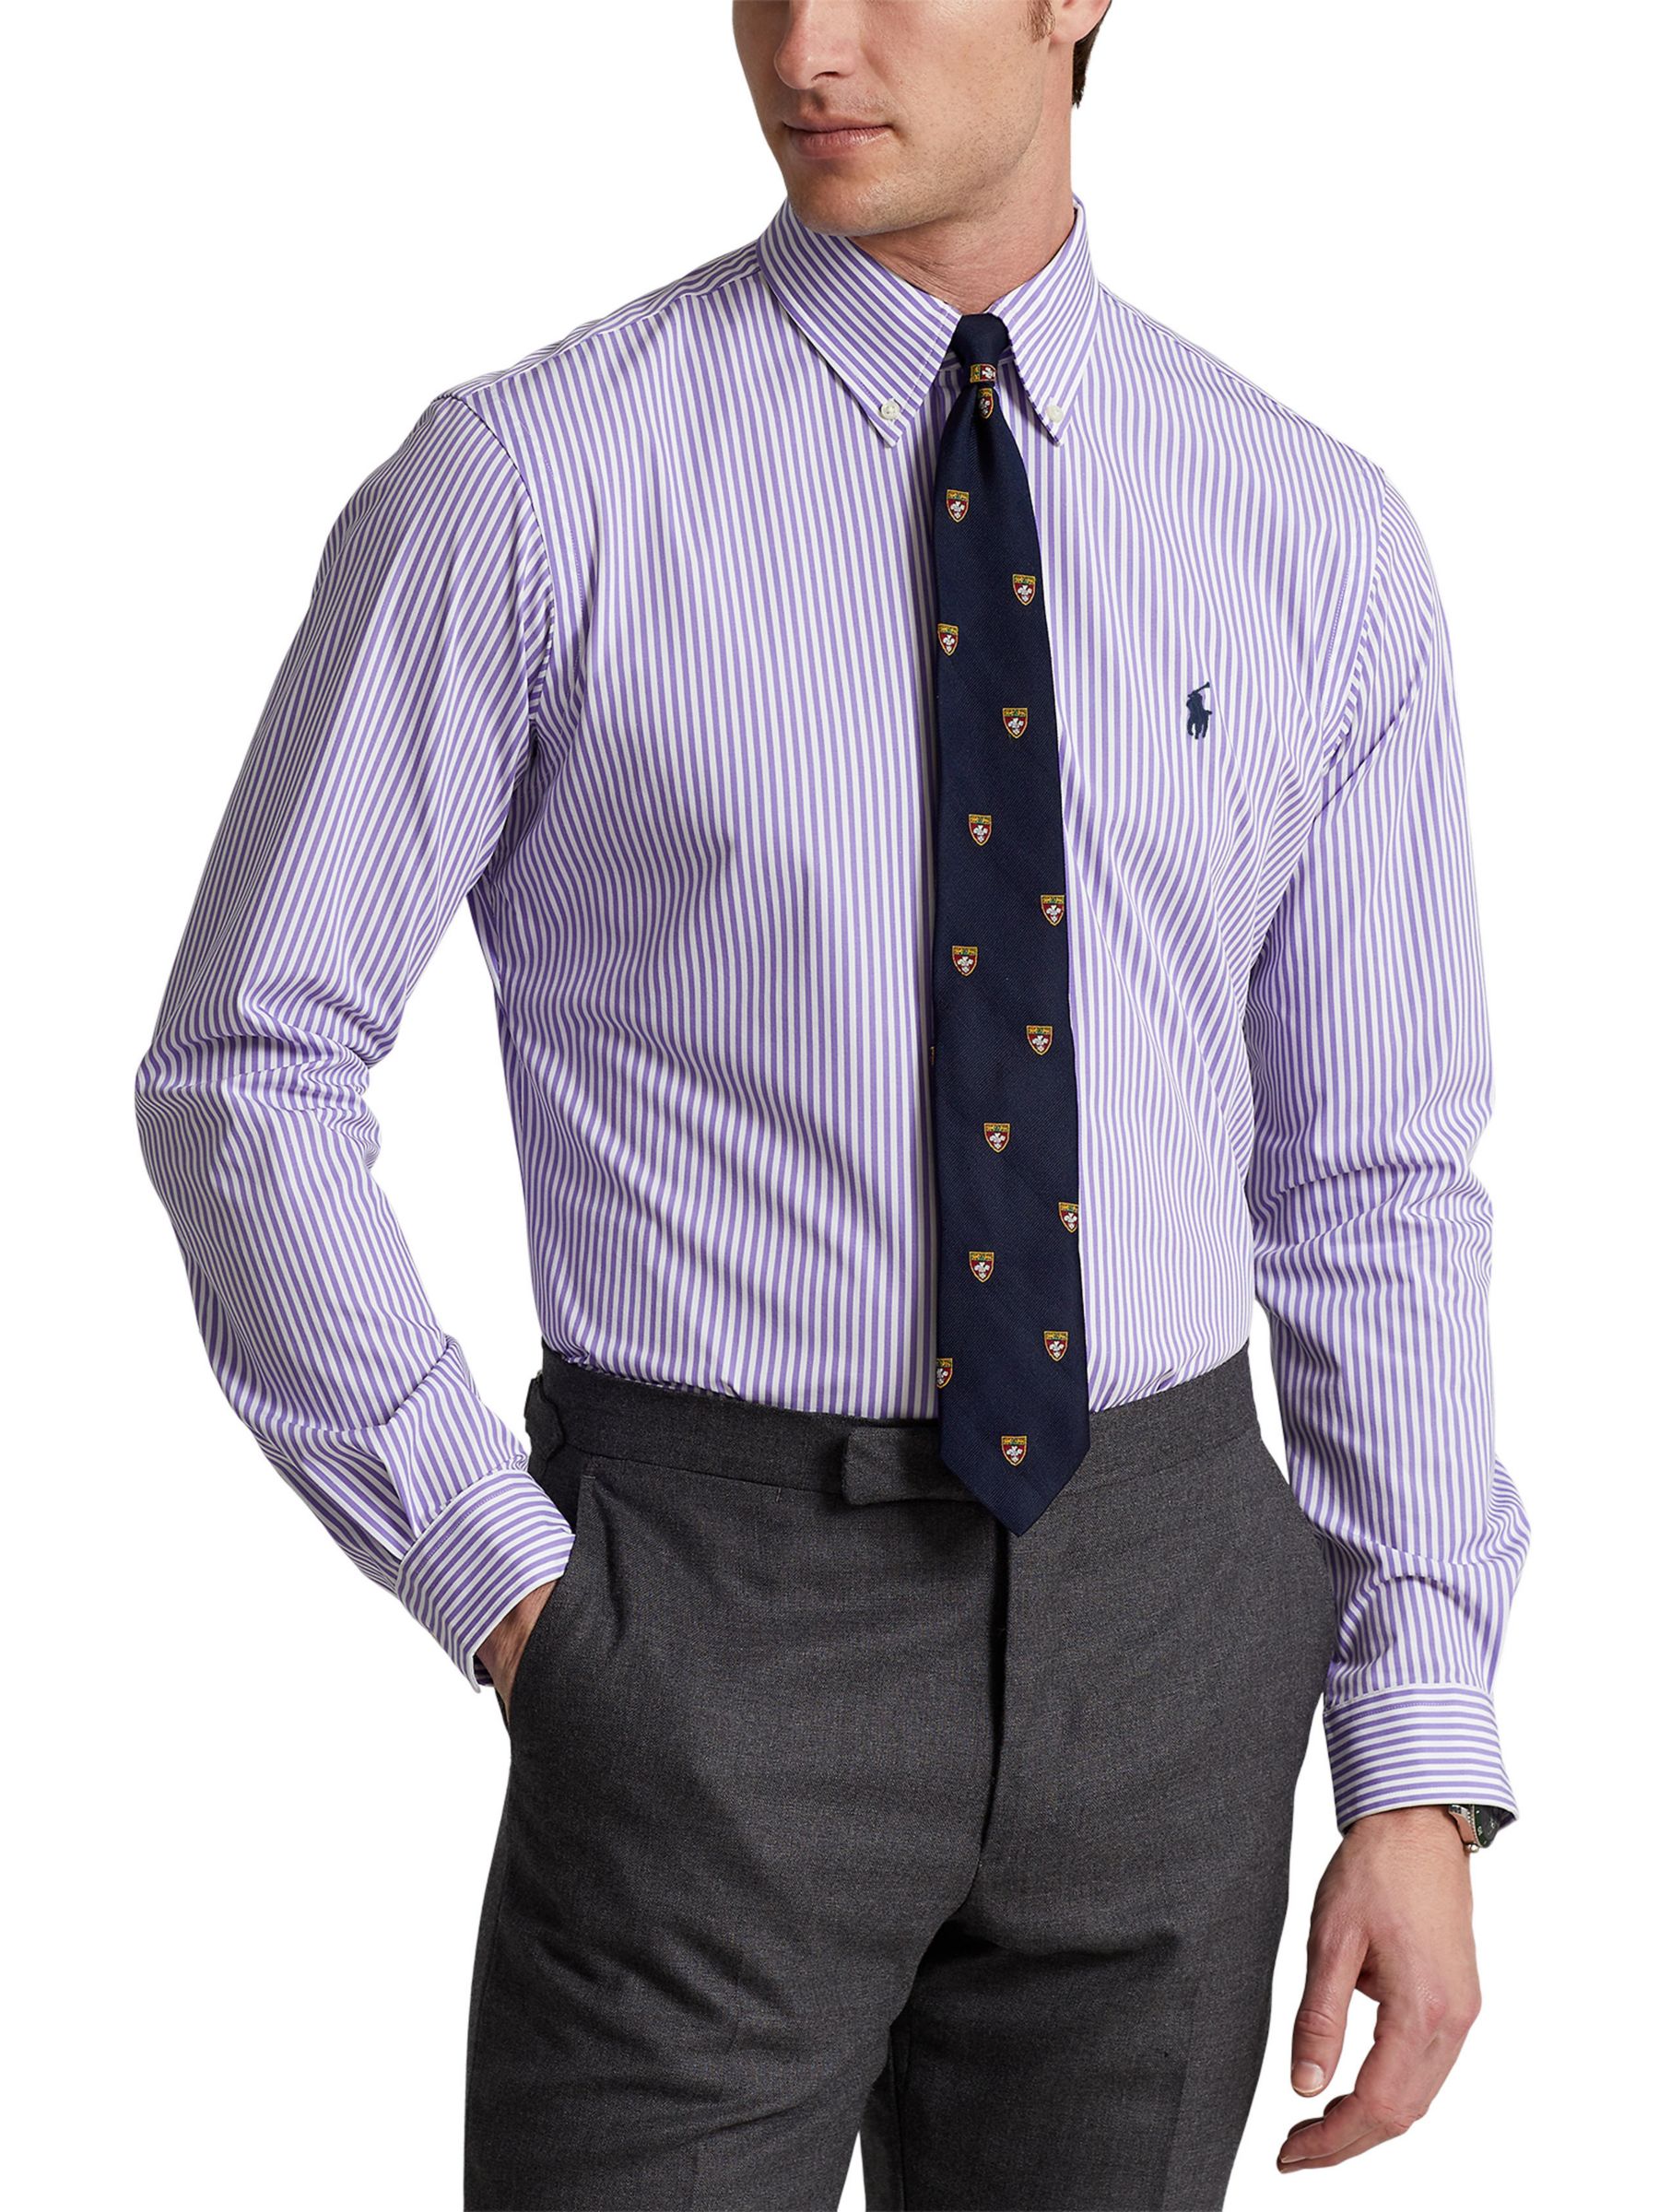 Ralph Lauren Striped Long Sleeved Shirt, Lavender/White at John Lewis ...